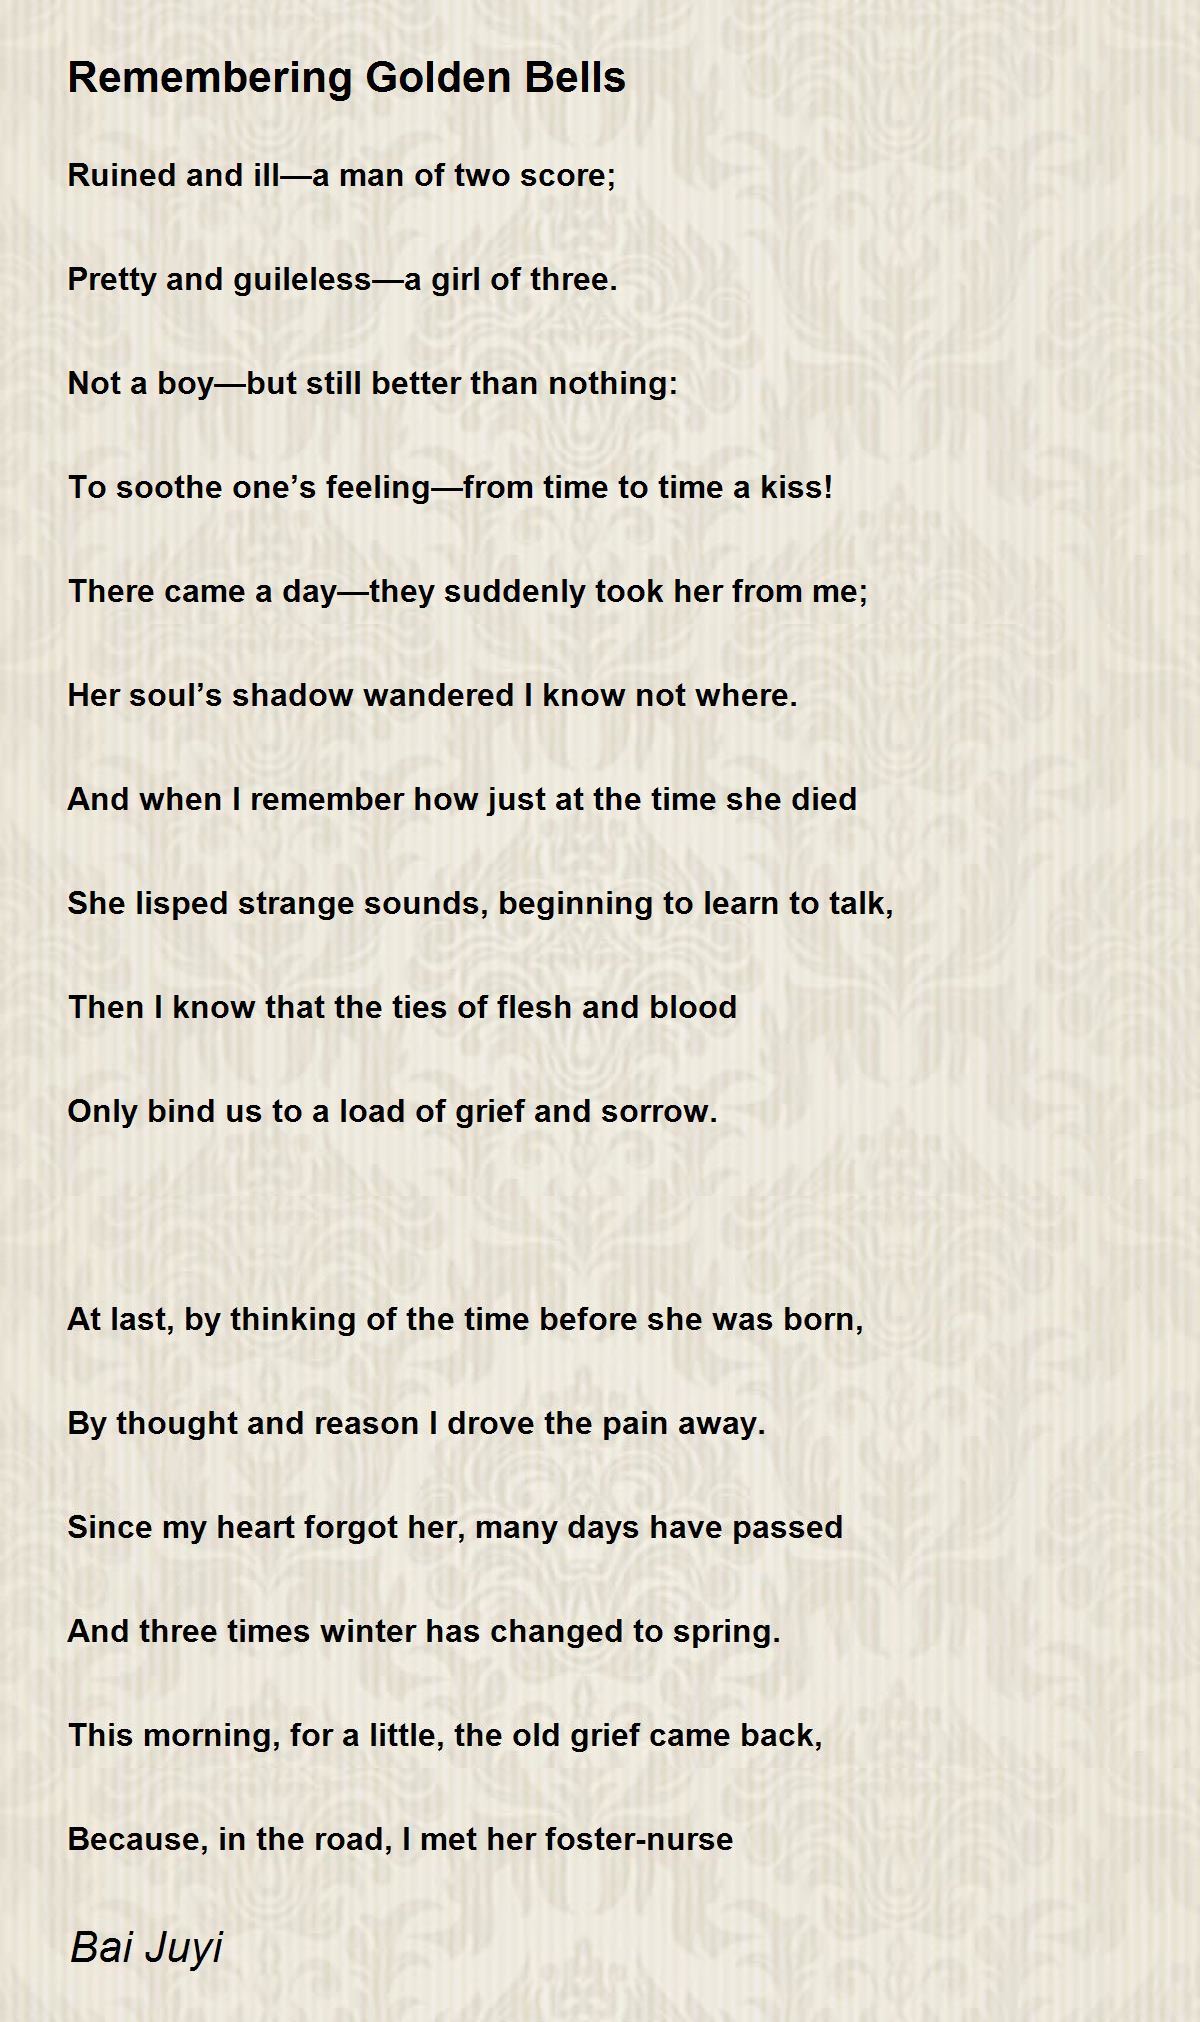 Remembering Golden Bells Poem by Bai Juyi - Poem Hunter